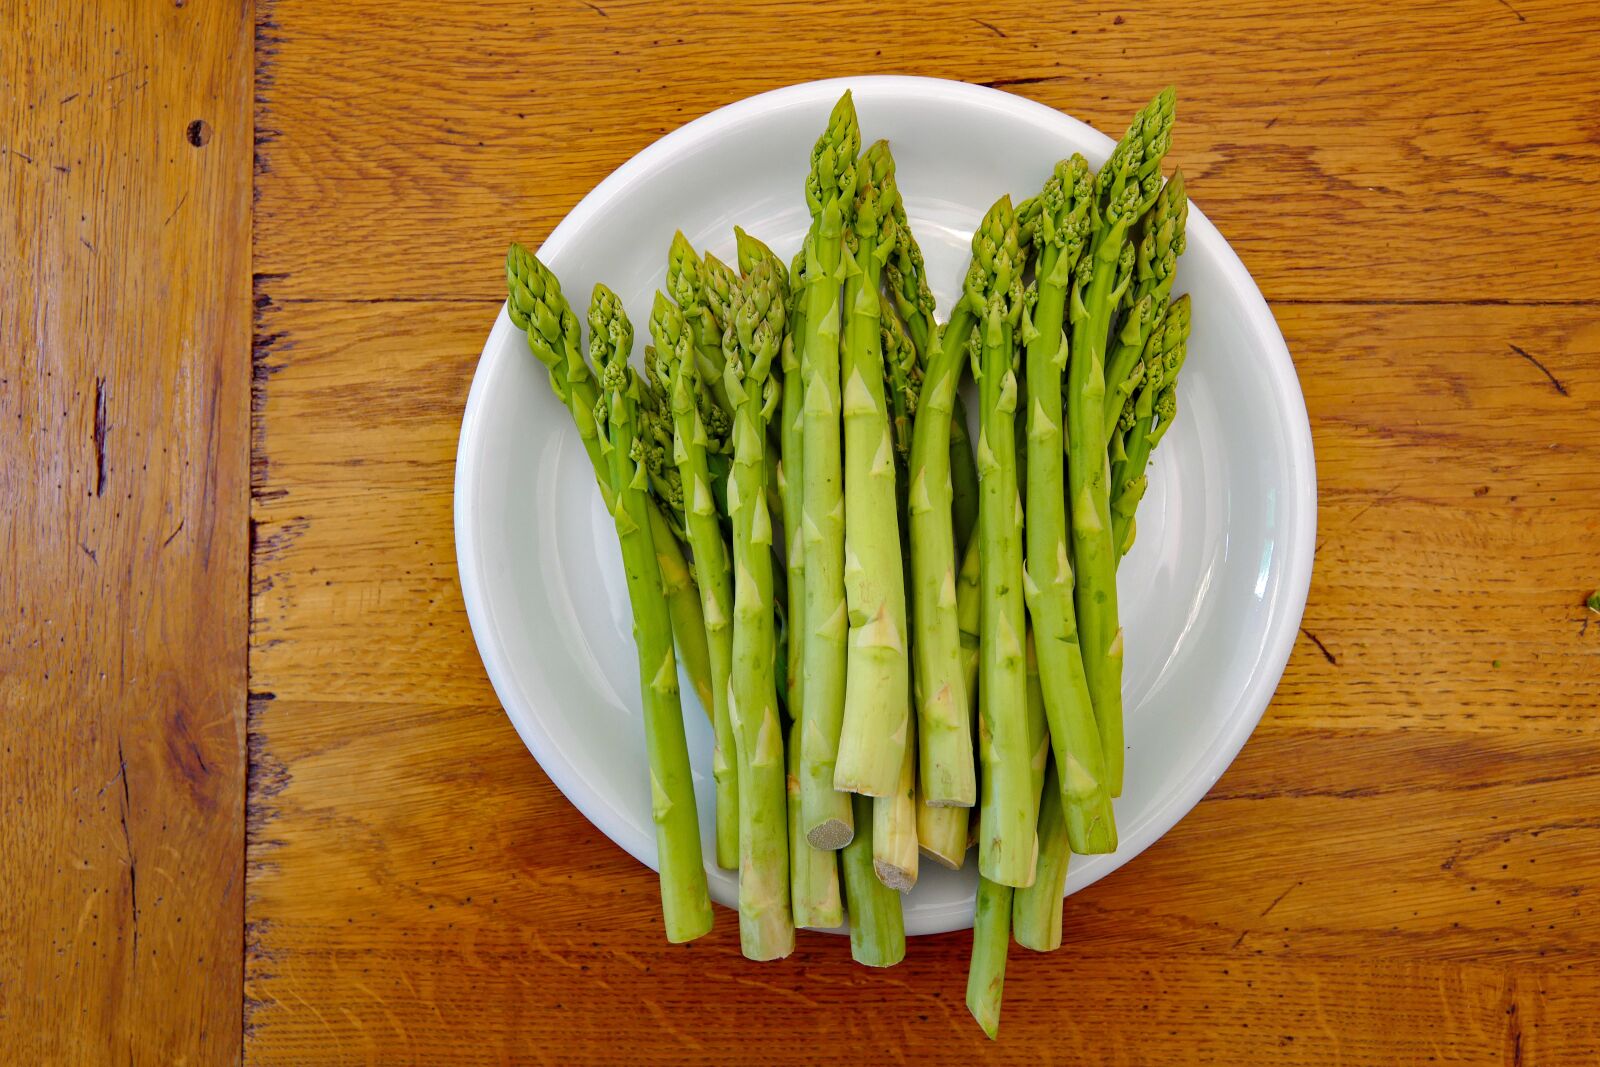 Super-Vario-Elmar-TL  1:3.5-4.5 / 11-23 ASPH. sample photo. Green asparagus, food, vegetables photography